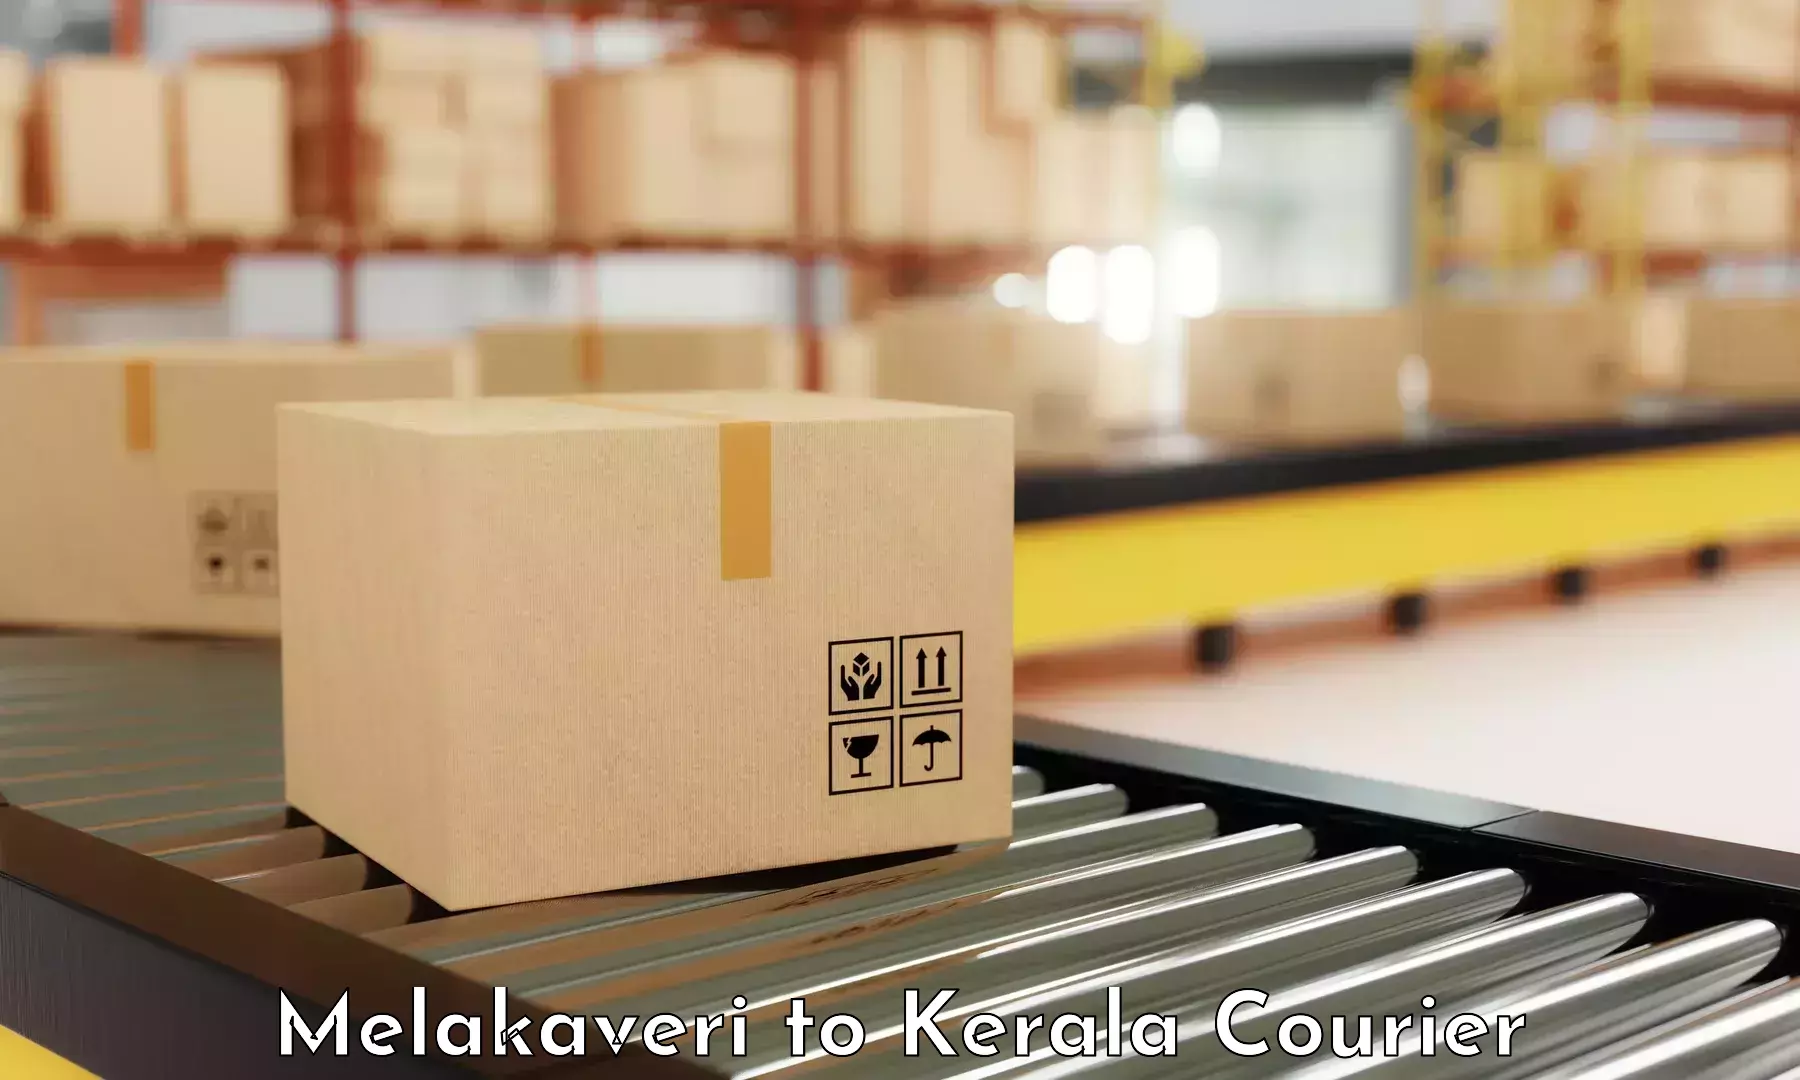 Courier service efficiency Melakaveri to Thamarassery